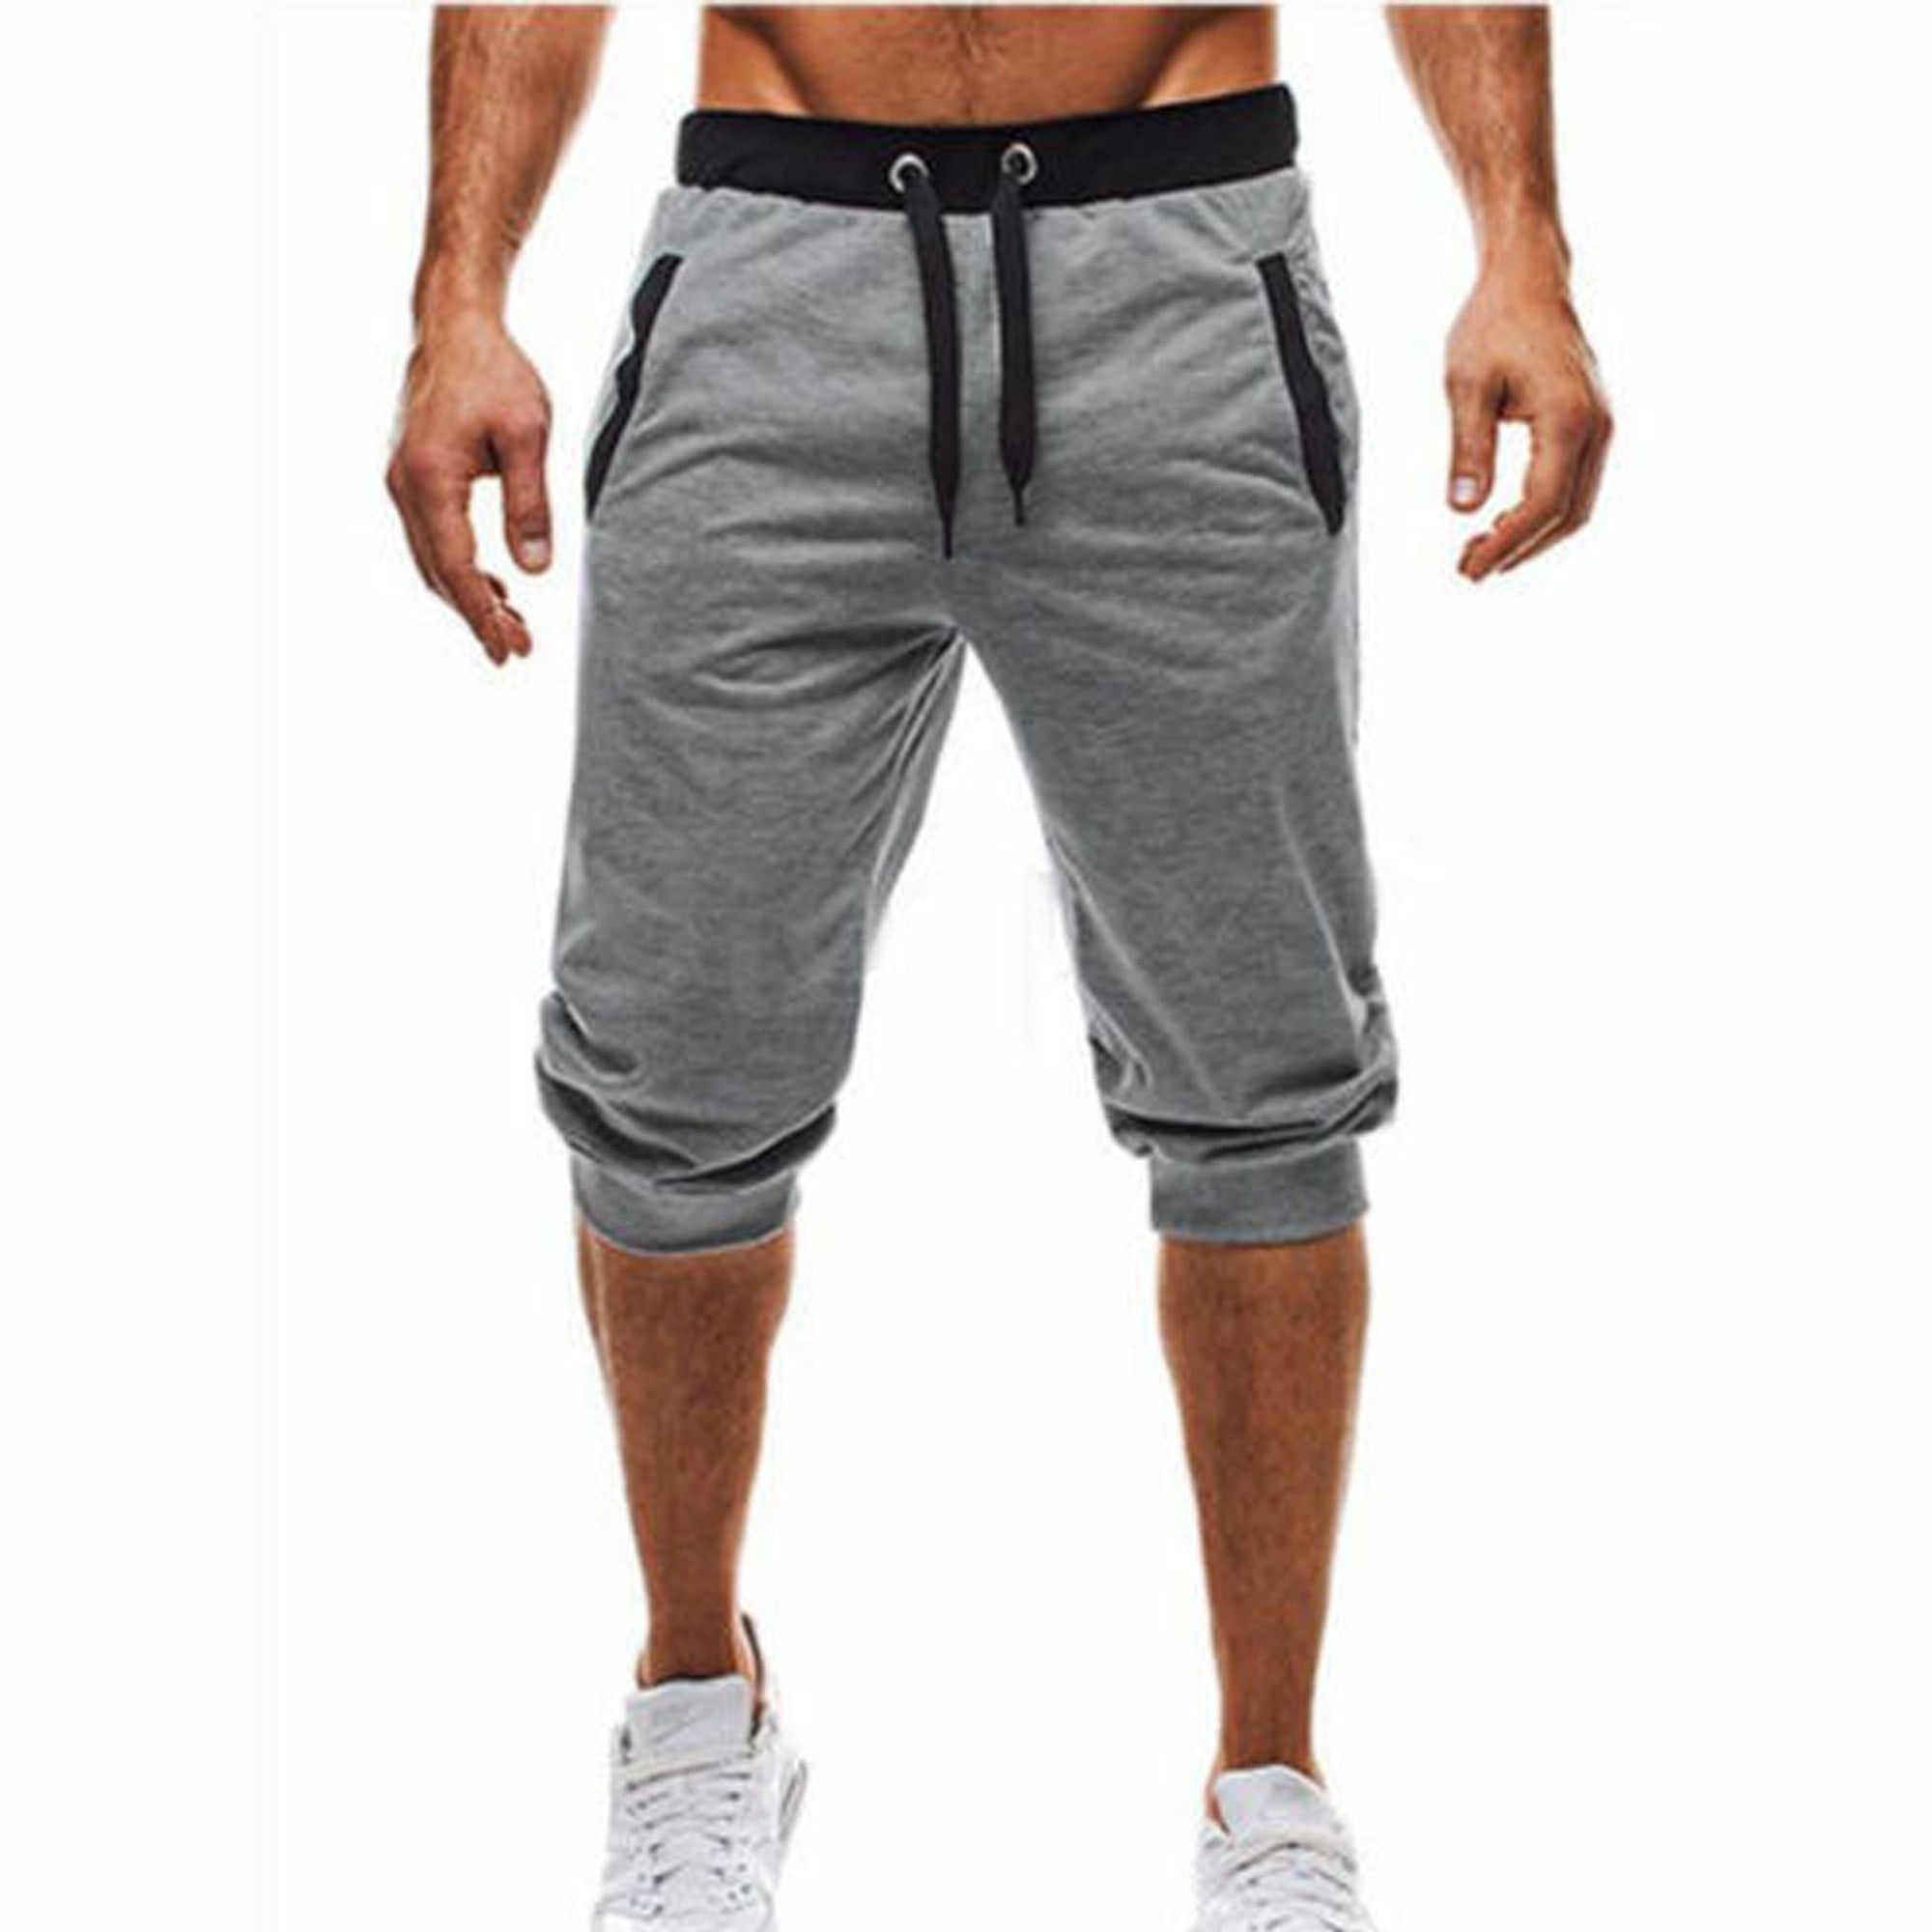 Short Men's Running Trousers Joggers Sport Pants Fitness Trousers 